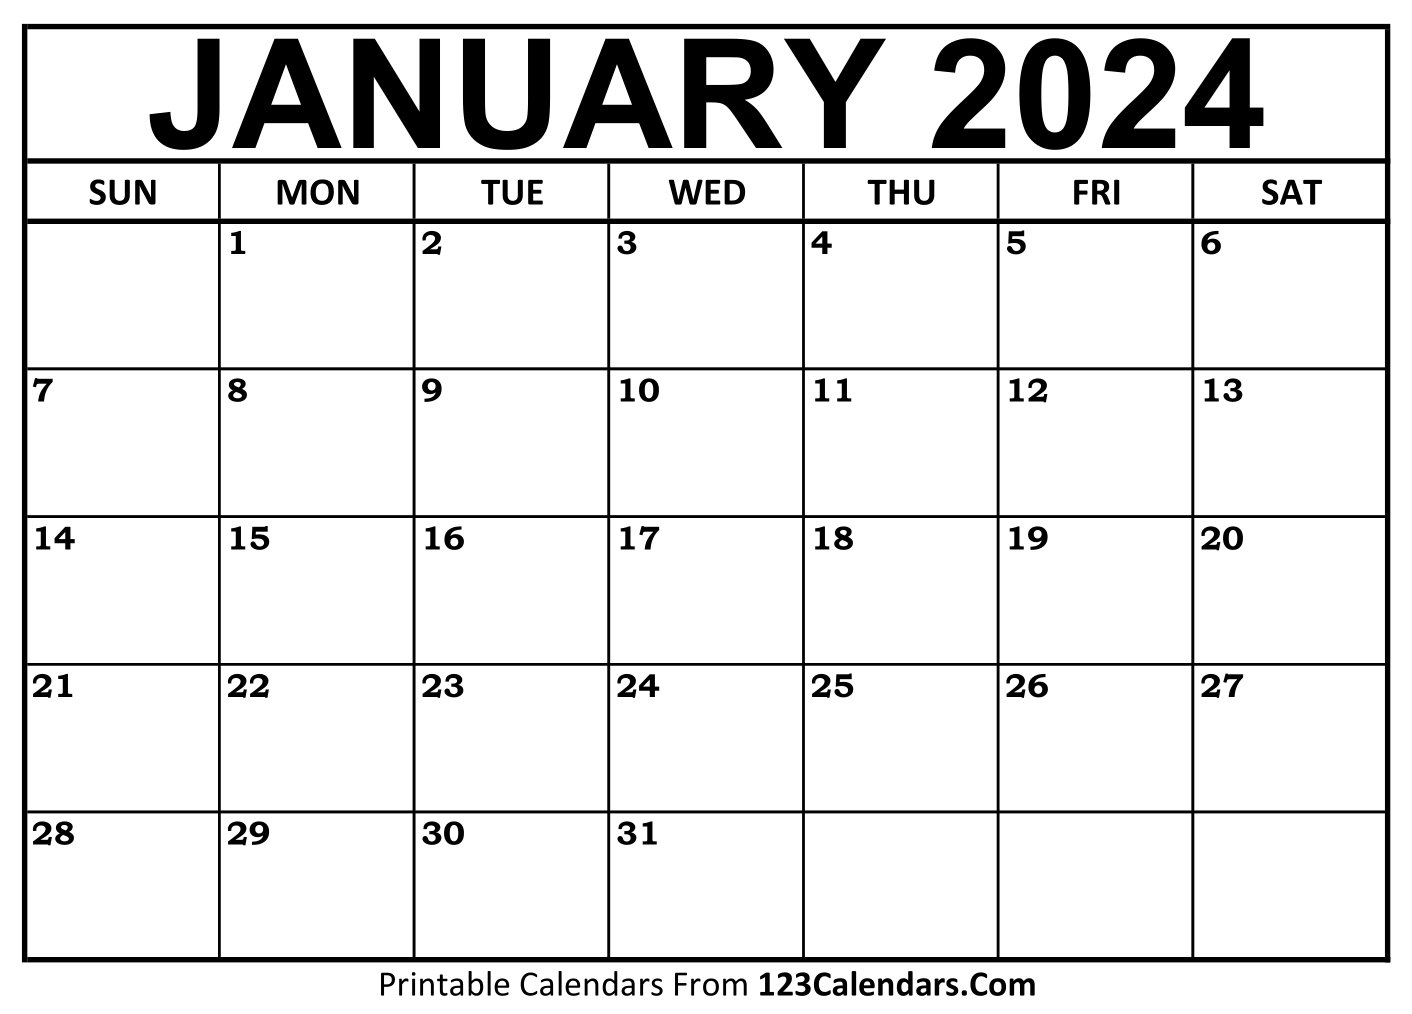 Printable January 2024 Calendar Templates - 123Calendars | Printable Monthly Calendar 2024 Canada